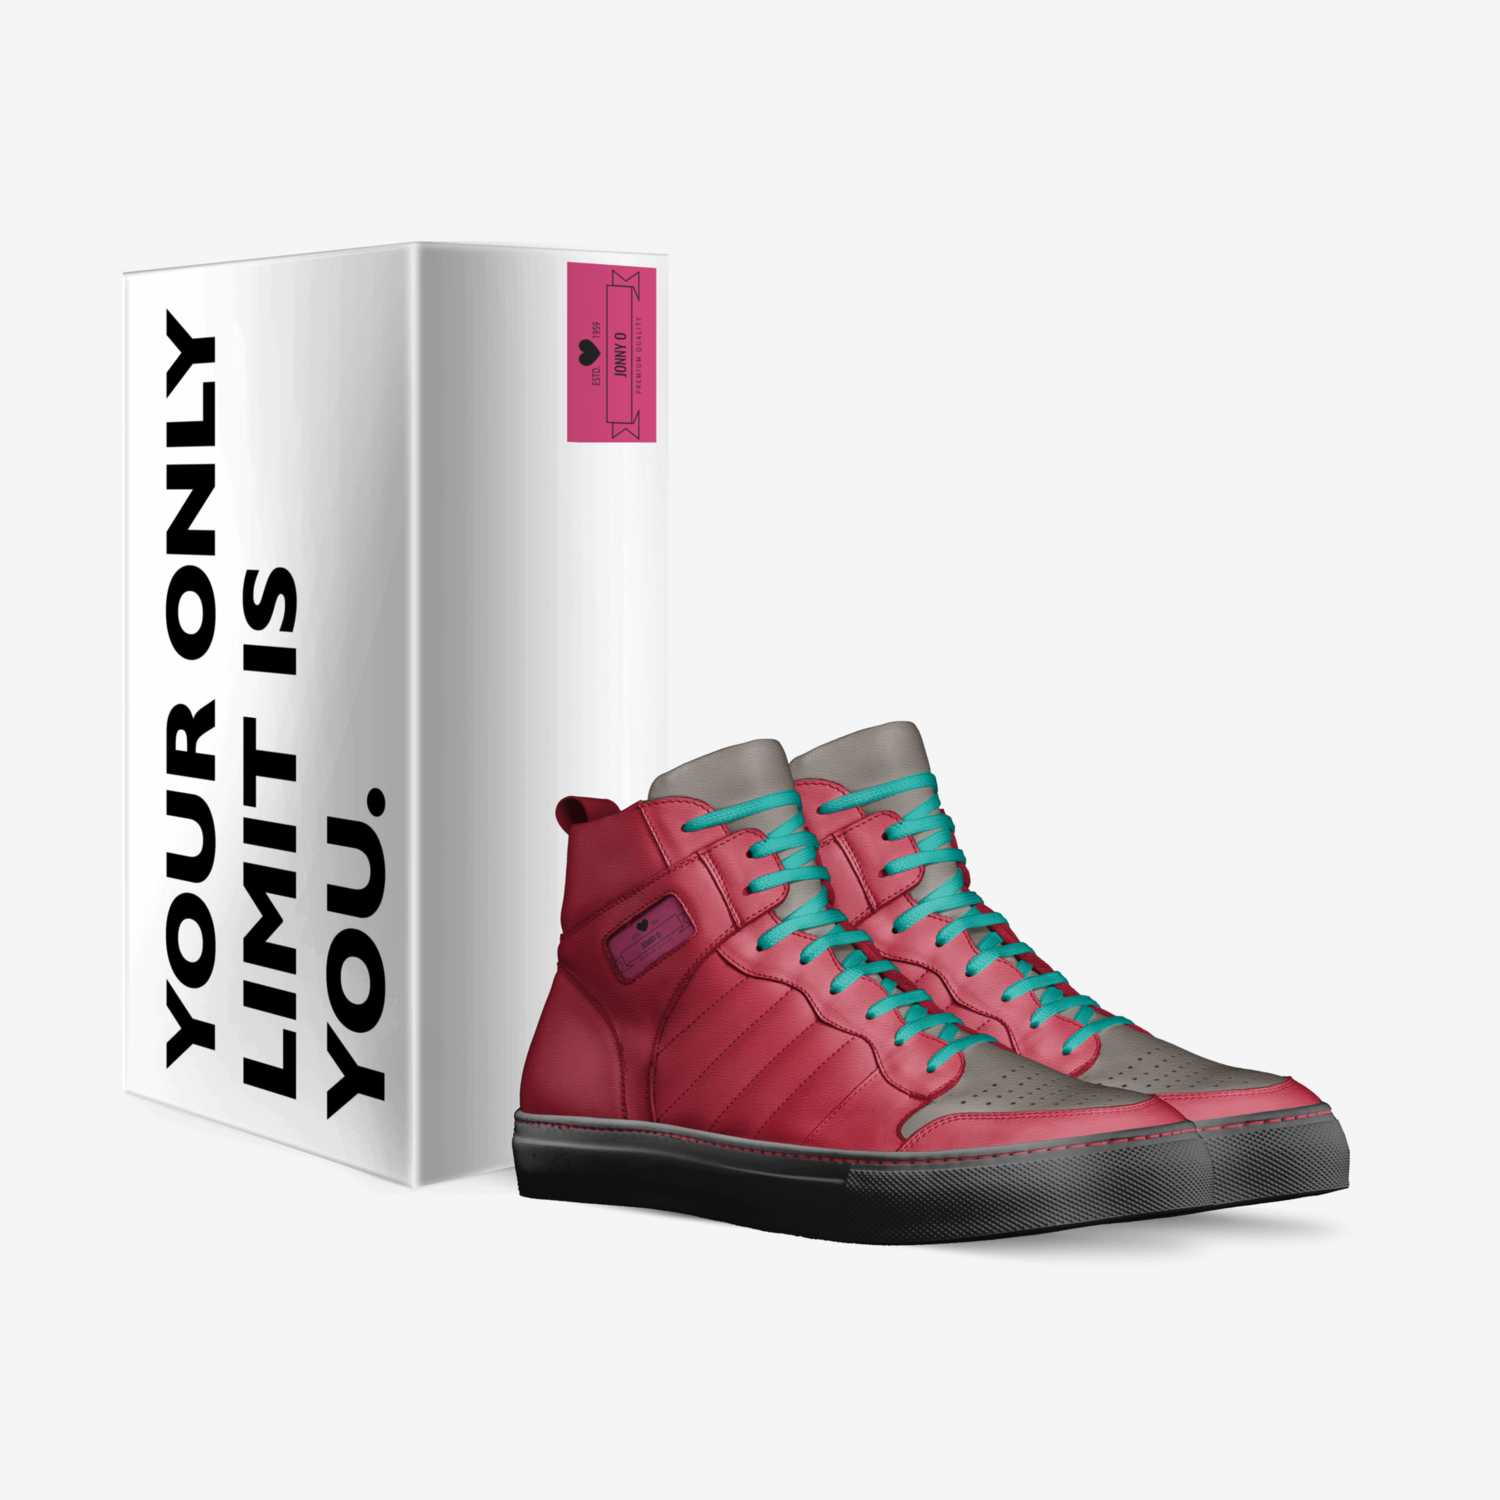 jonny o custom made in Italy shoes by Amber Fay Jones | Box view